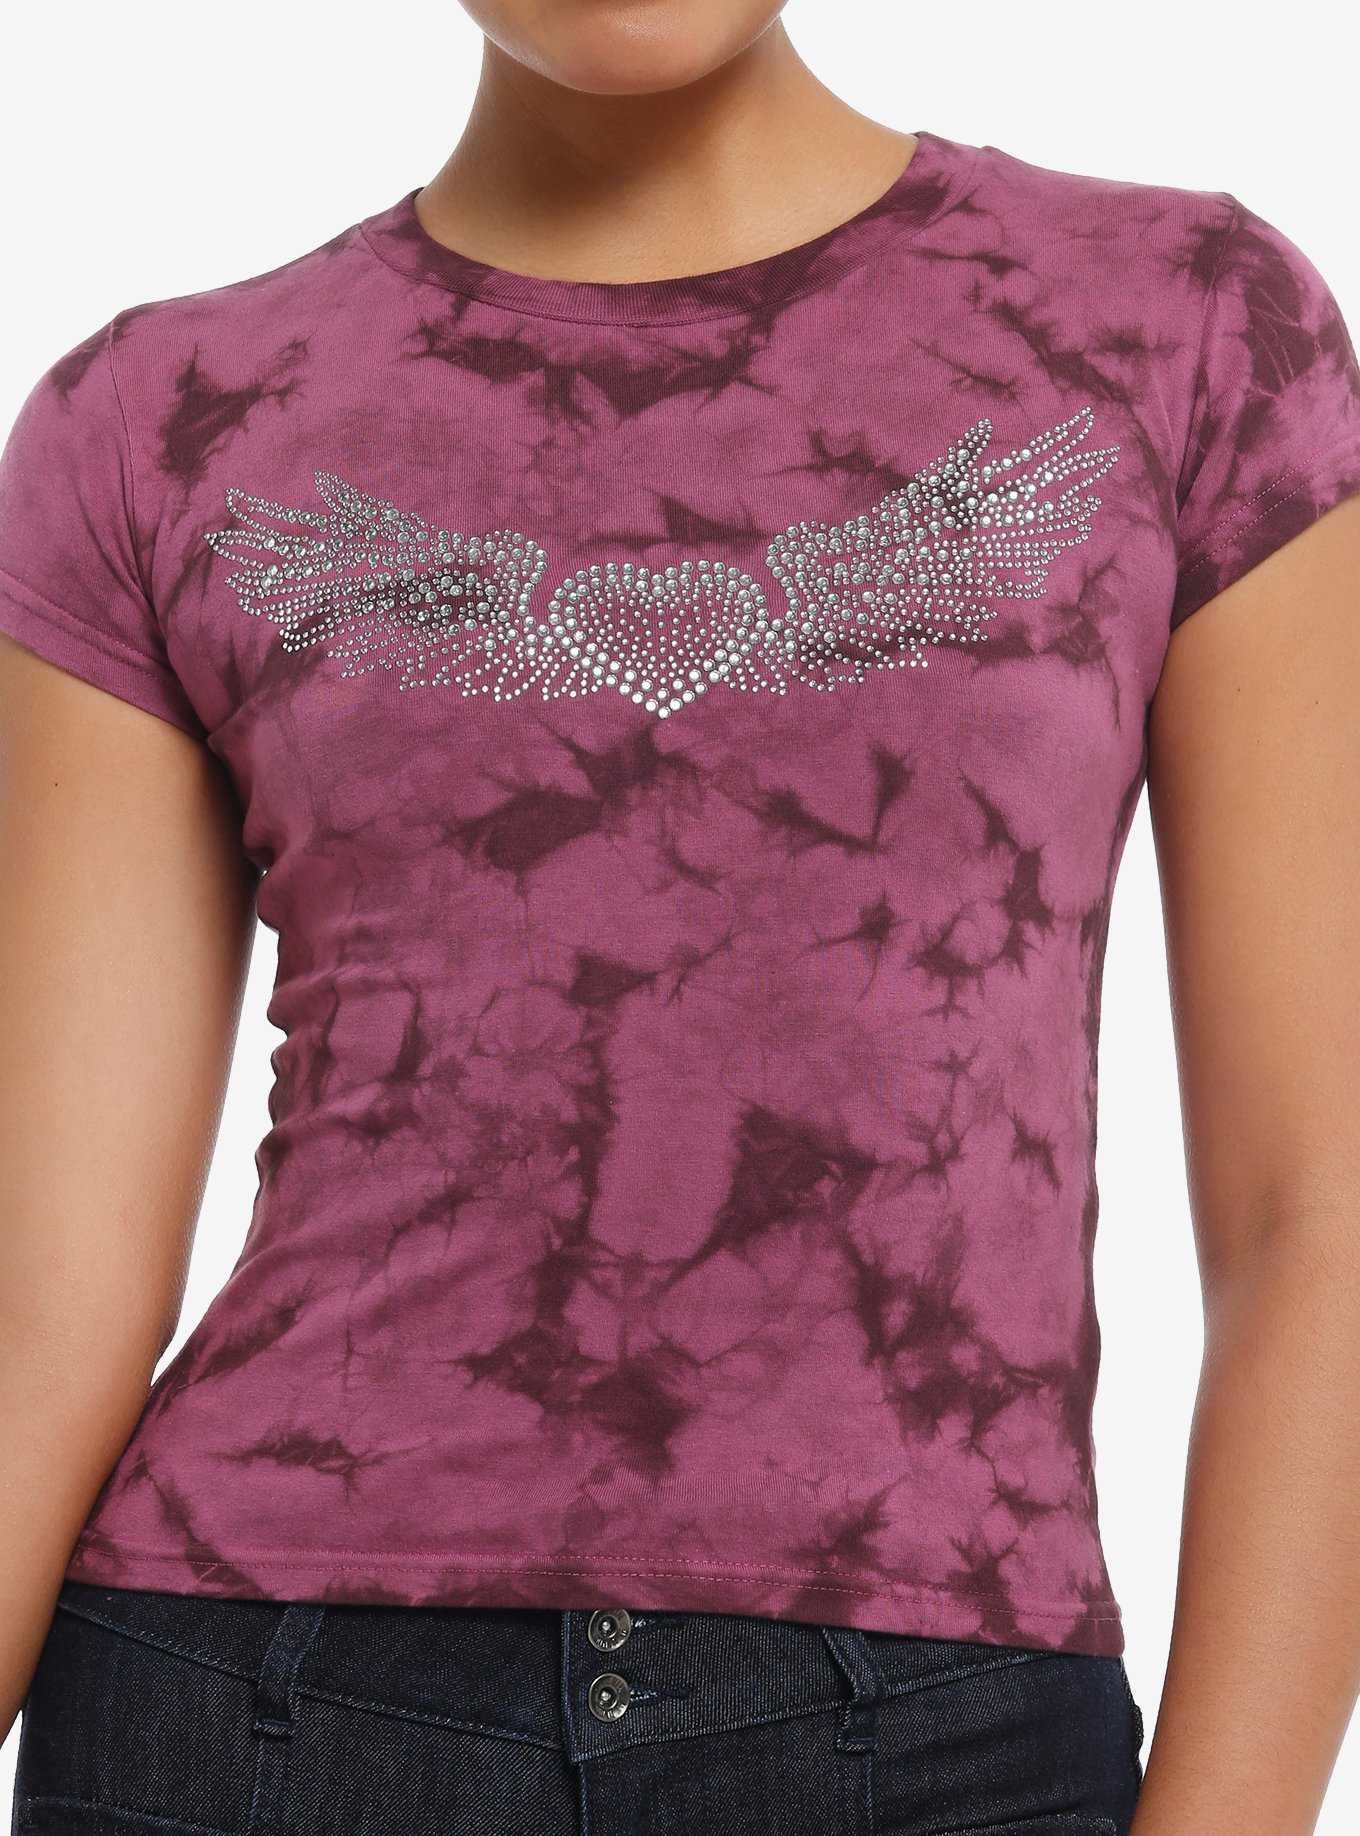 Winged Heart Rhinestone Pink Tie-Dye Girls Baby T-Shirt, , hi-res